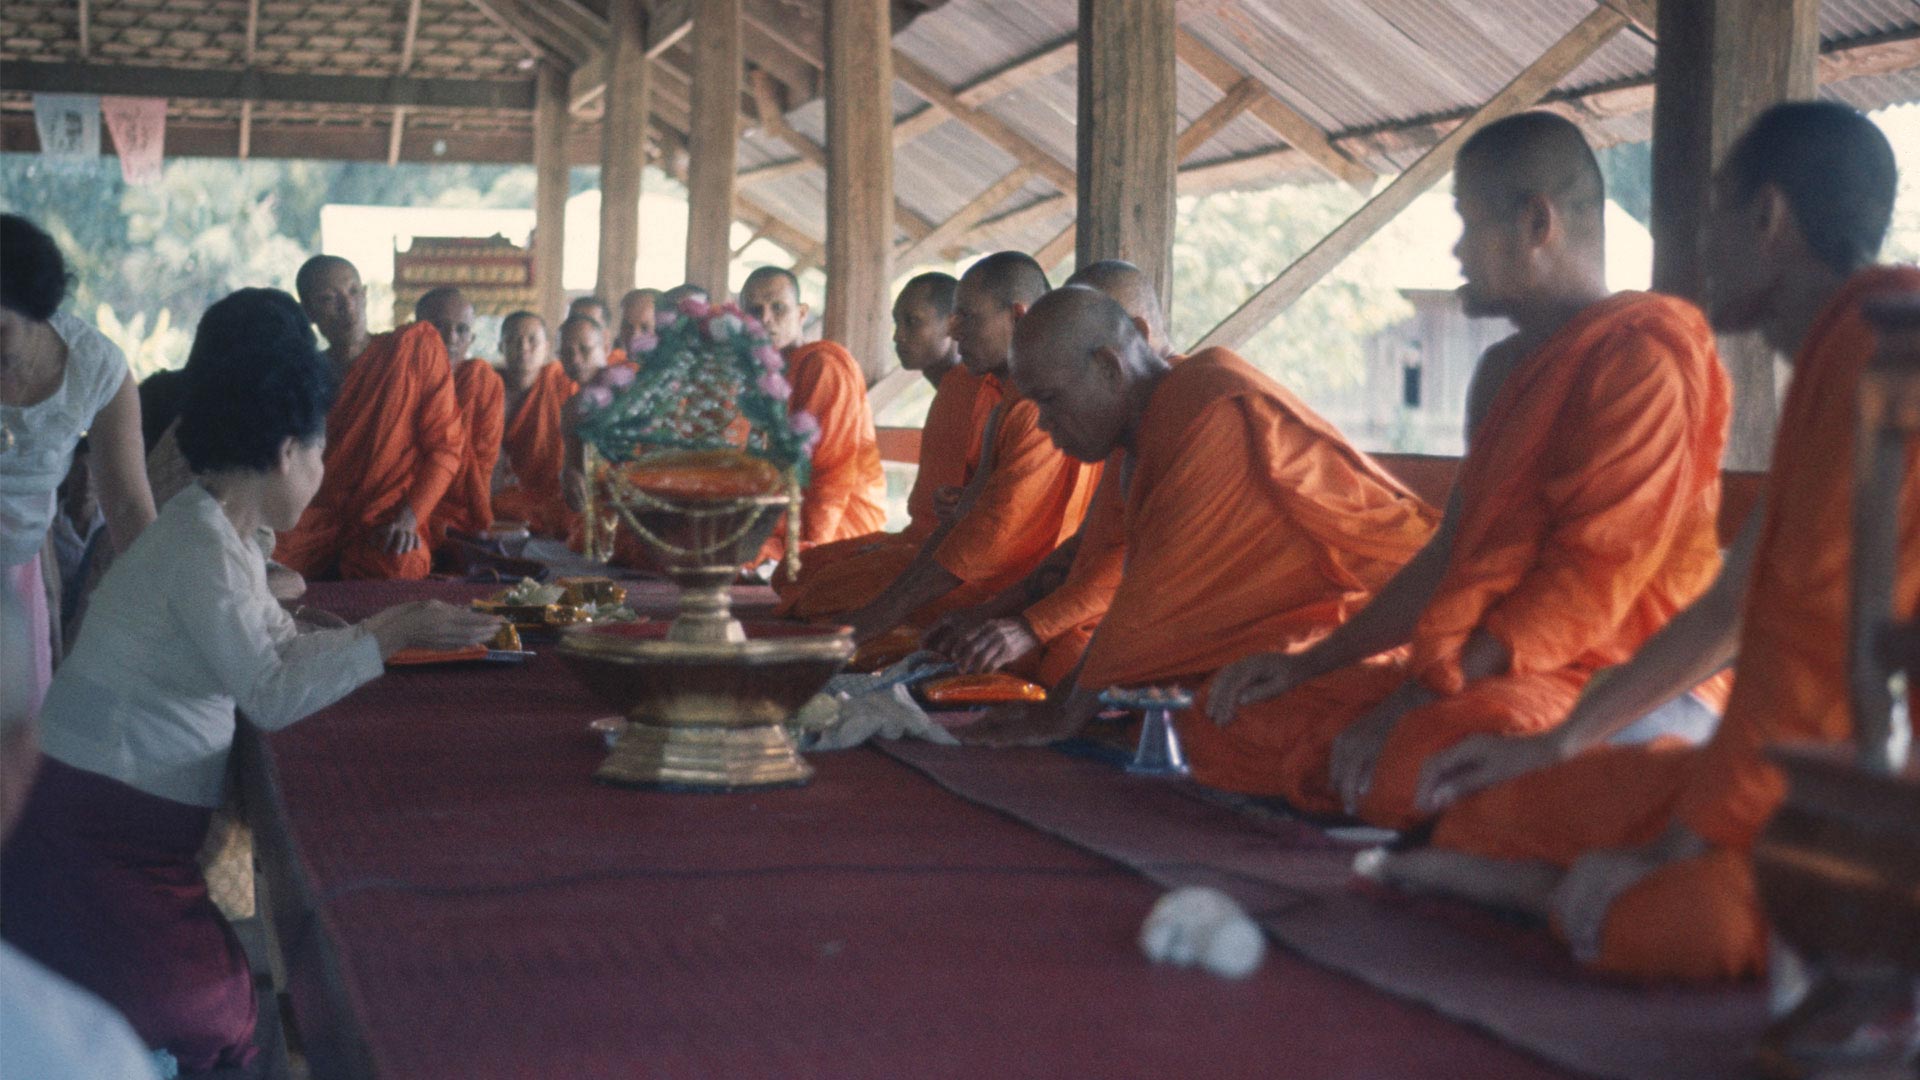 monks kneeling at a meal